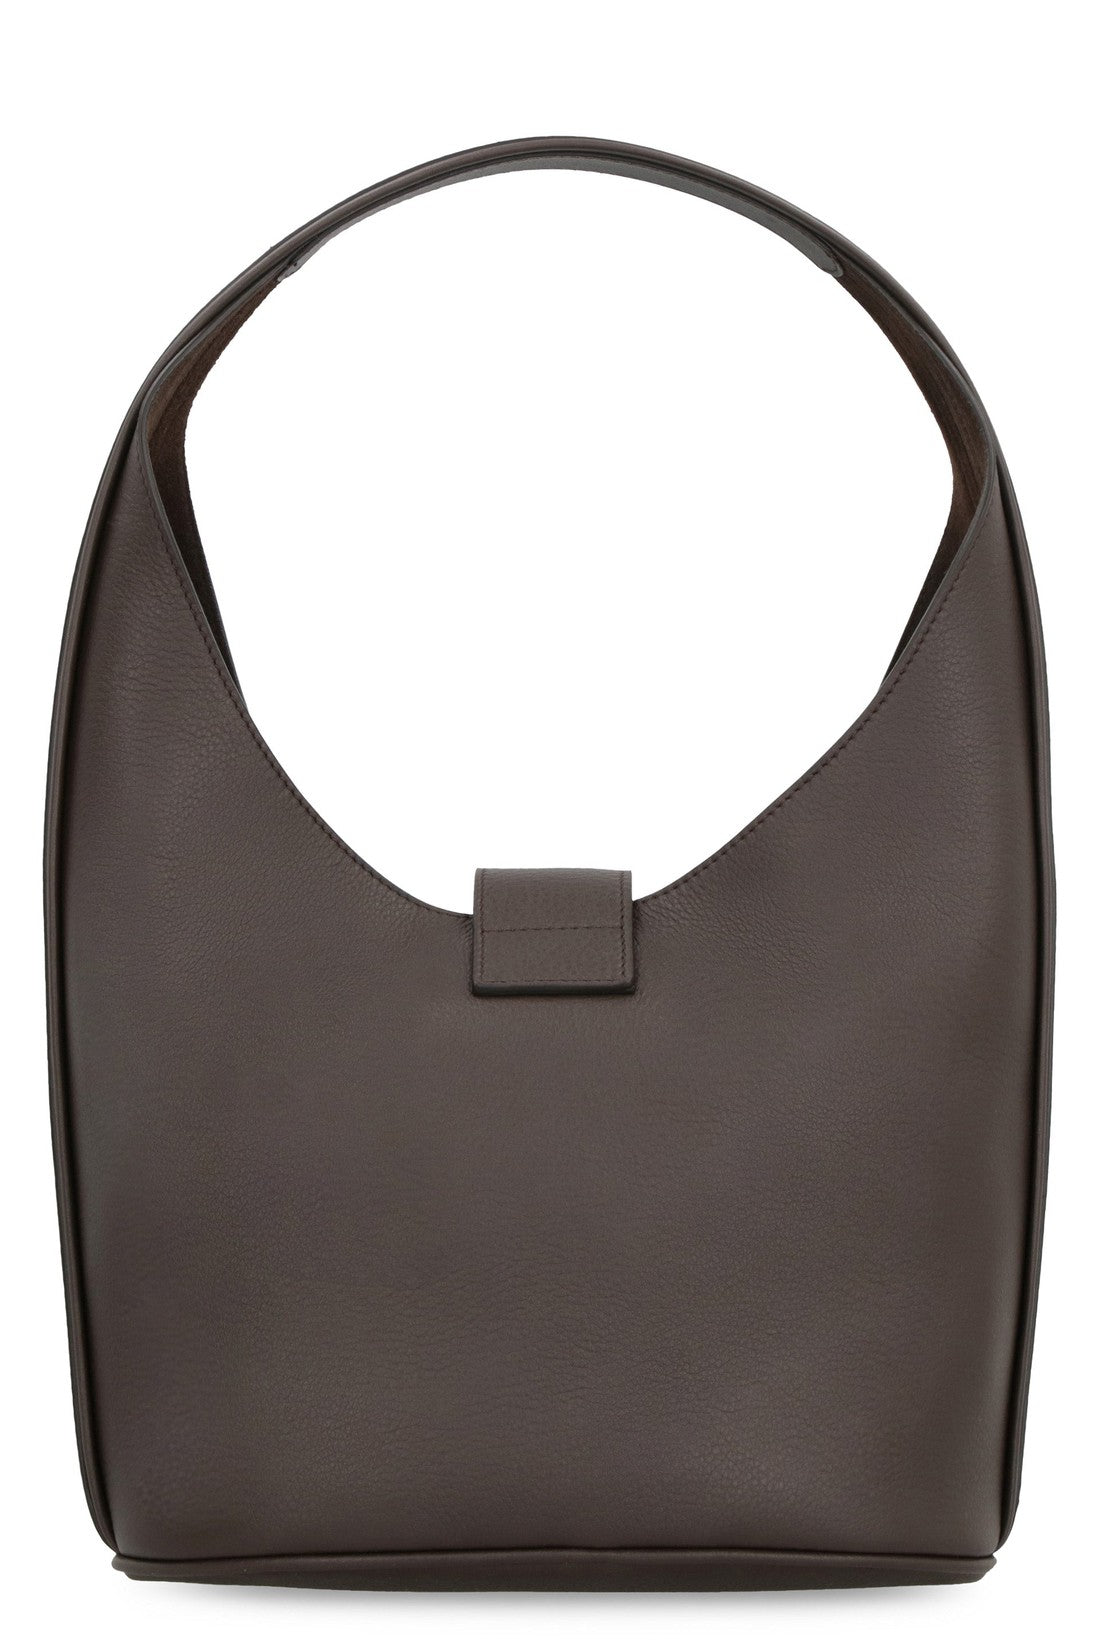 FERRAGAMO-OUTLET-SALE-Leather hobo-bag-ARCHIVIST